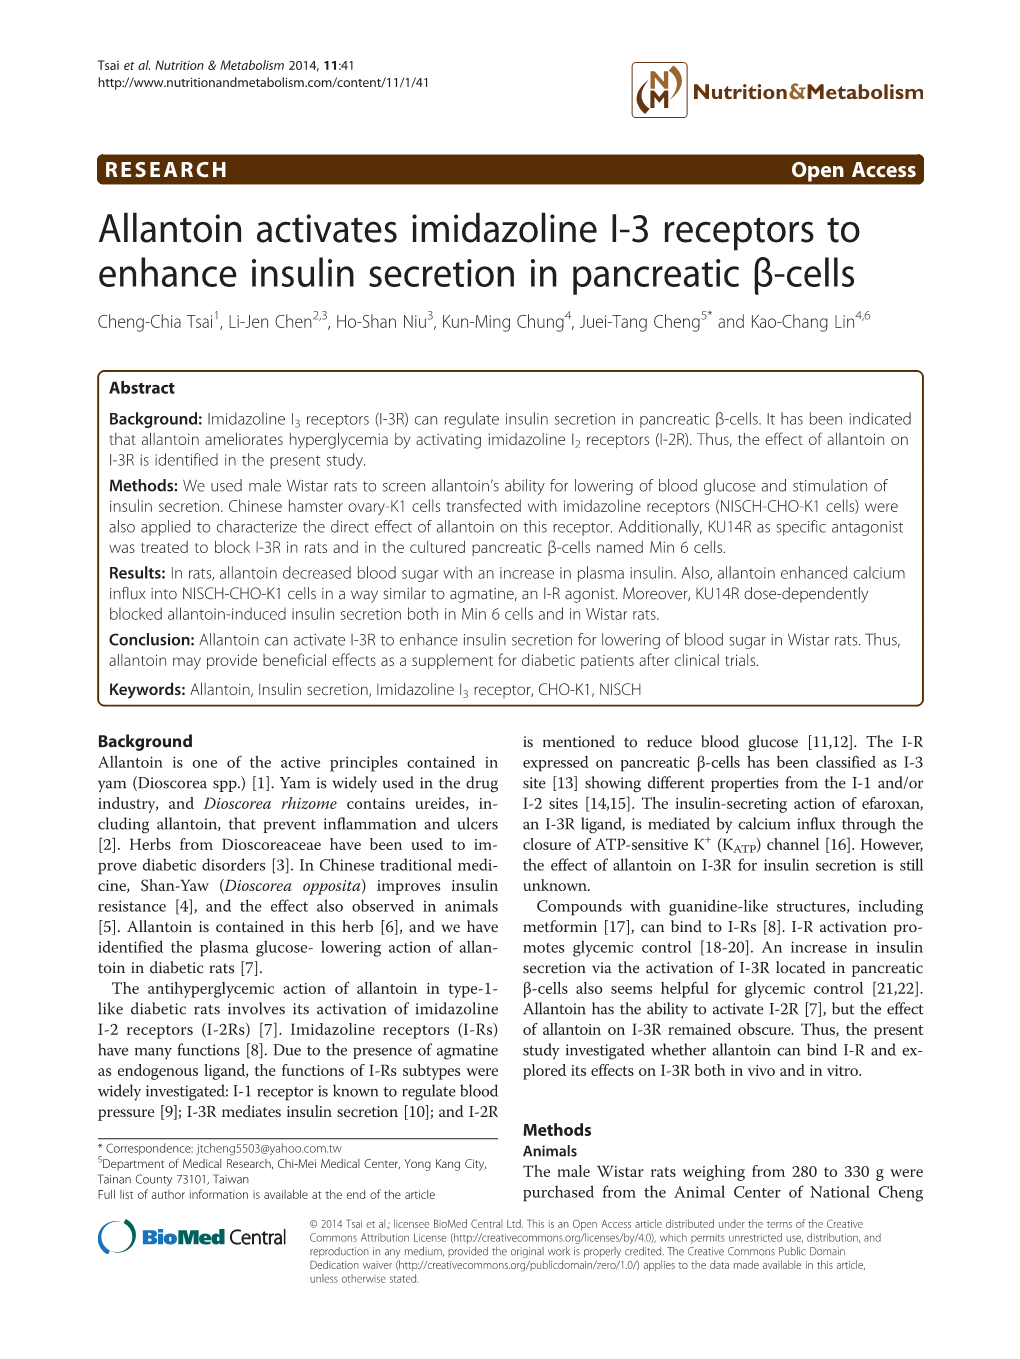 Allantoin Activates Imidazoline I-3 Receptors to Enhance Insulin